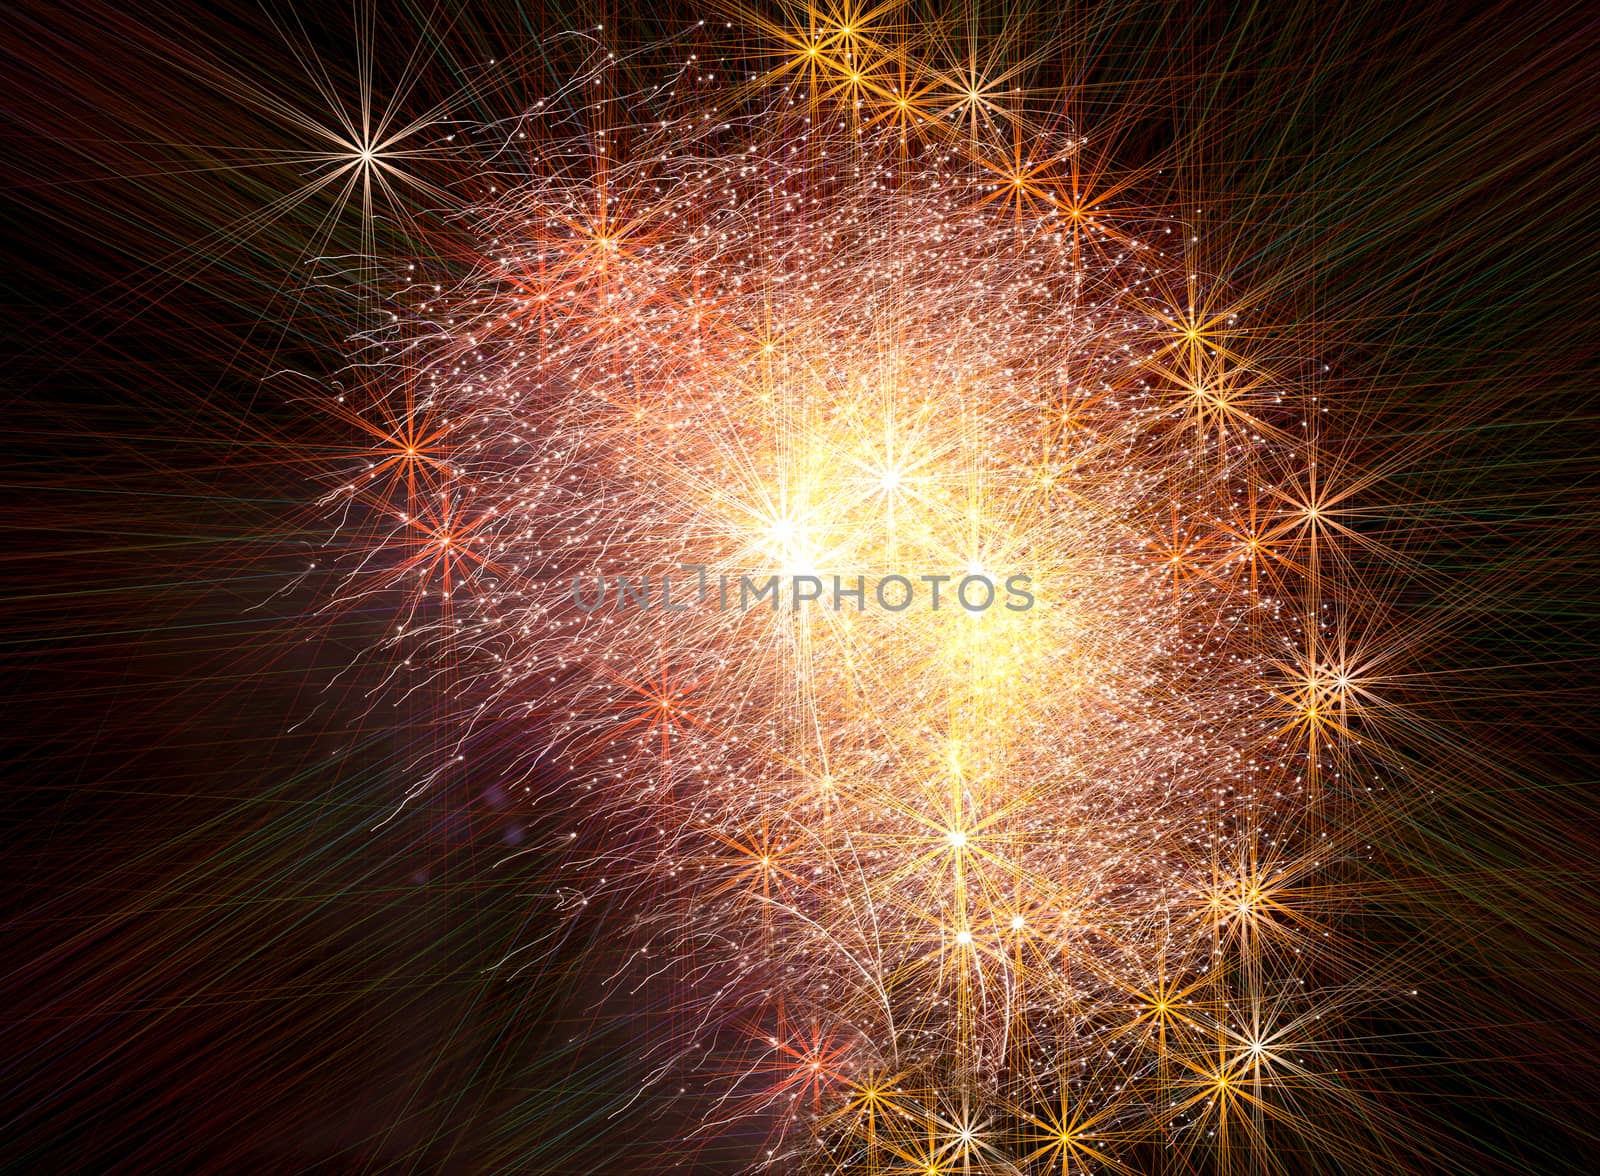 The background of stellar fireworks by Krakatuk